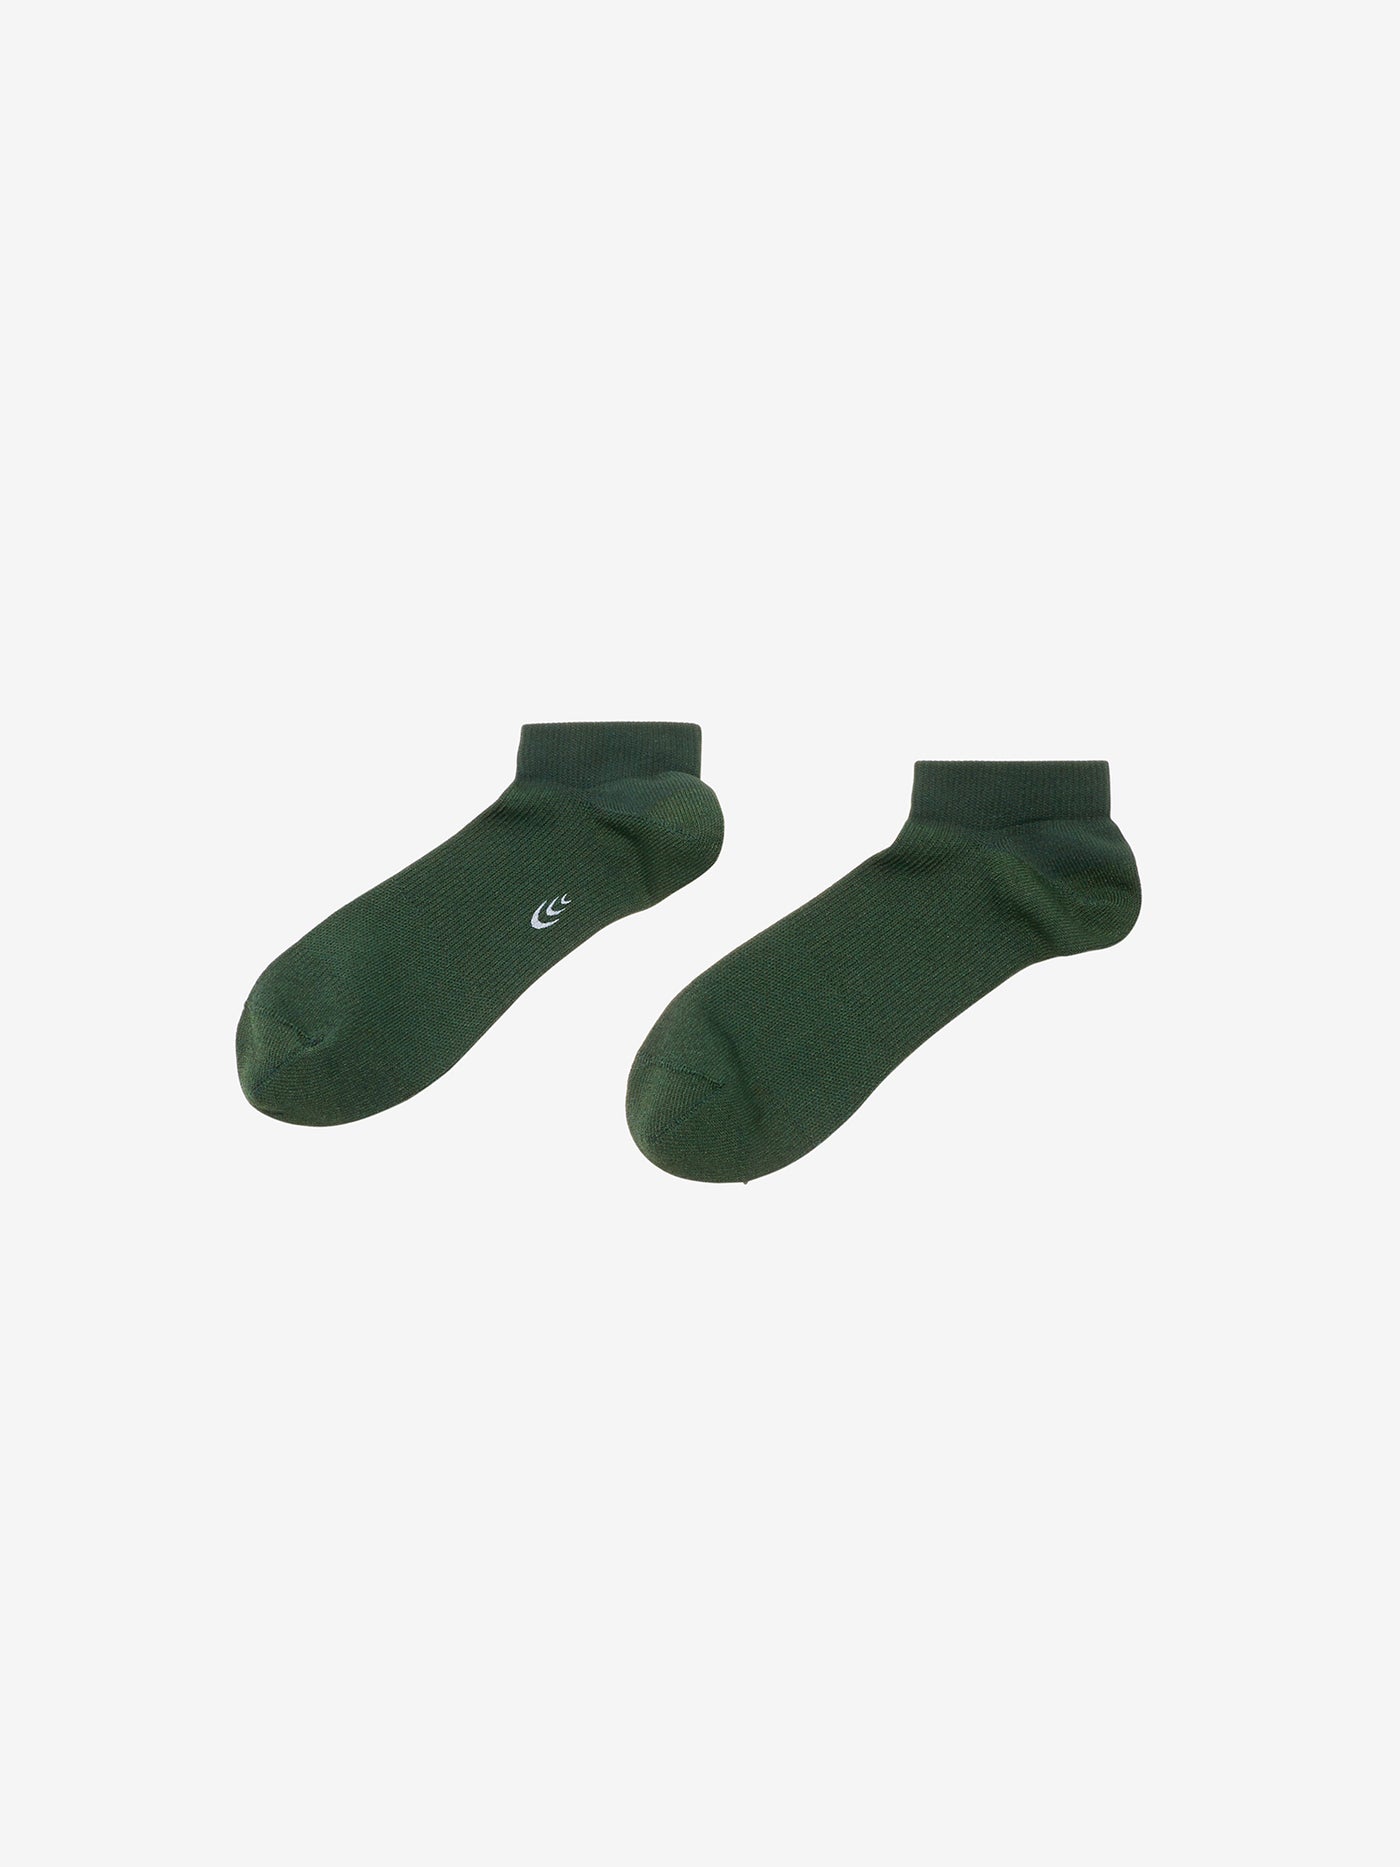 Paper Fiber Arch Support Ankle Socks